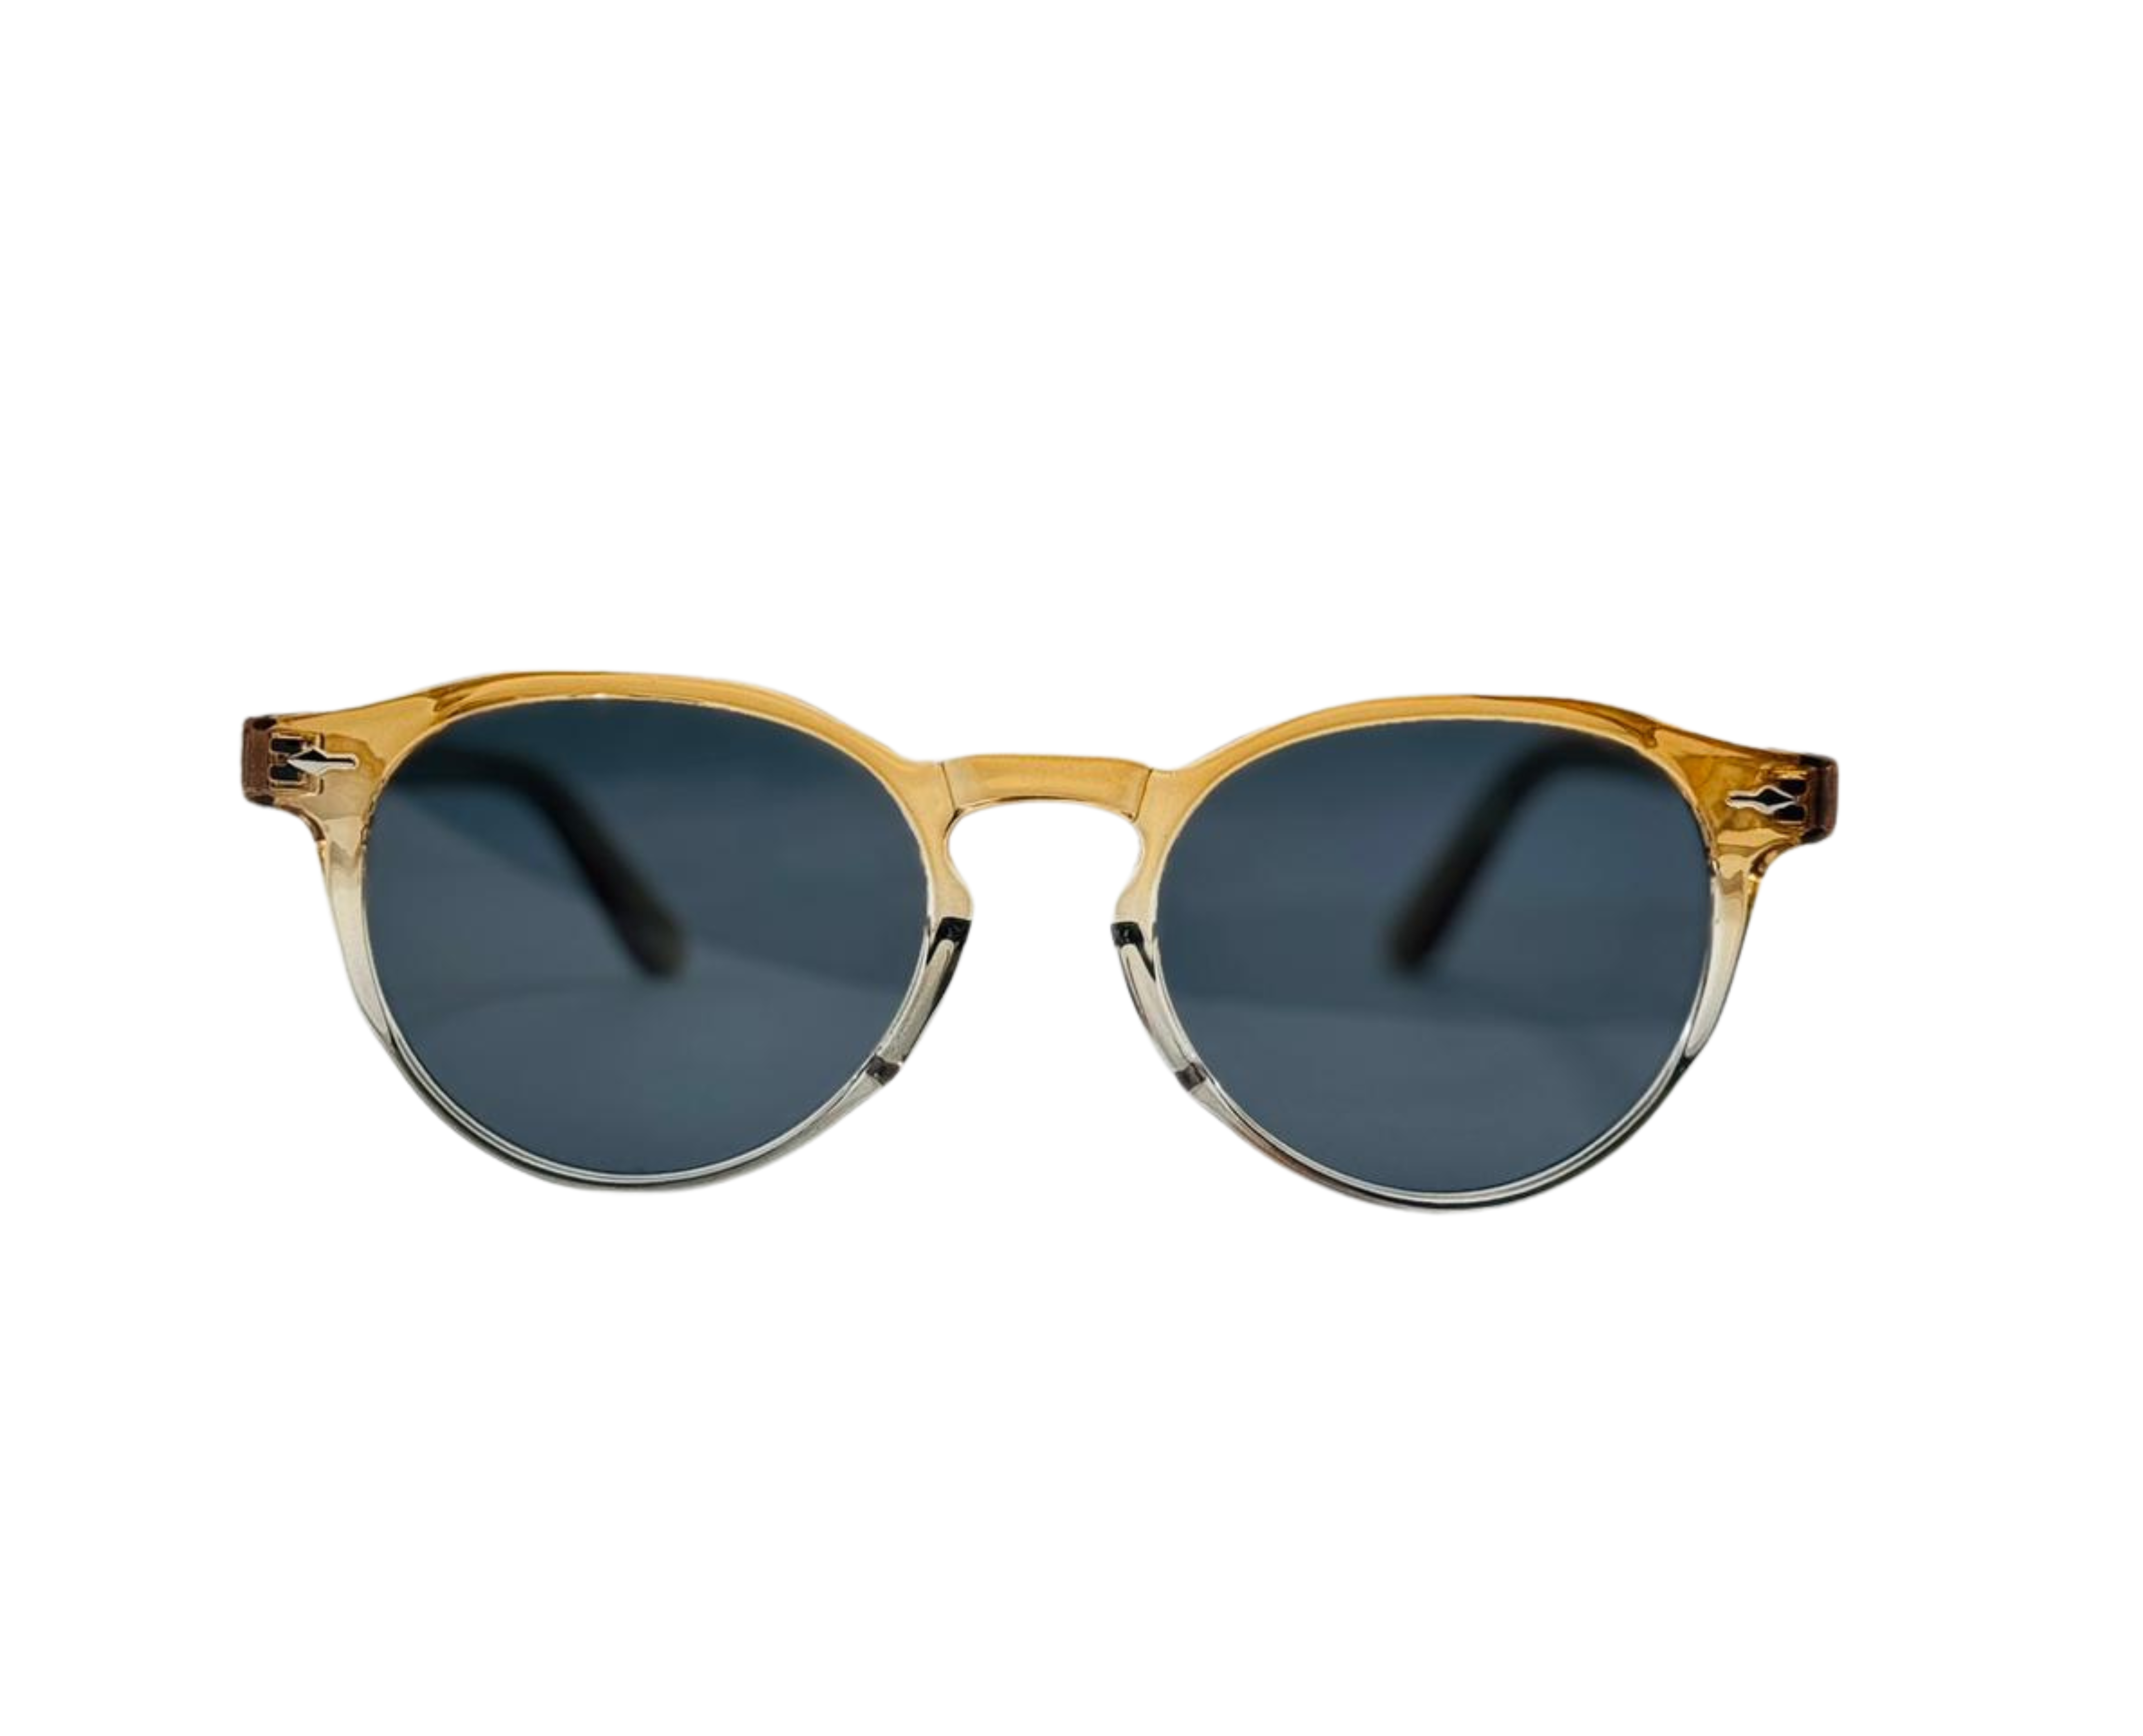 NS Luxury - 9822 - Light Brown Gradient - Sunglasses